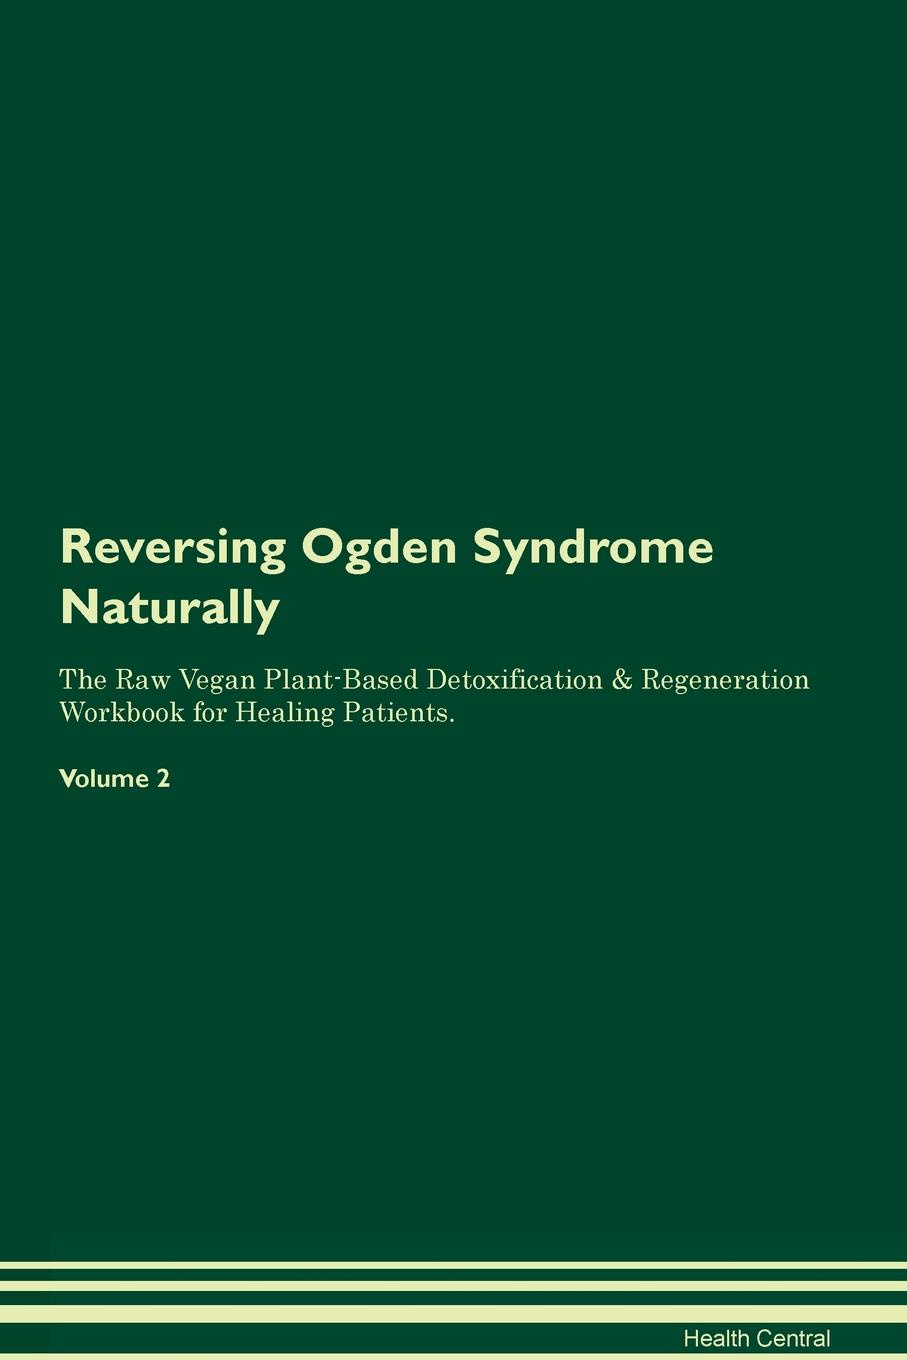 Reversing Ogden Syndrome Naturally The Raw Vegan Plant-Based Detoxification & Regeneration Workbook for Healing Patients. Volume 2